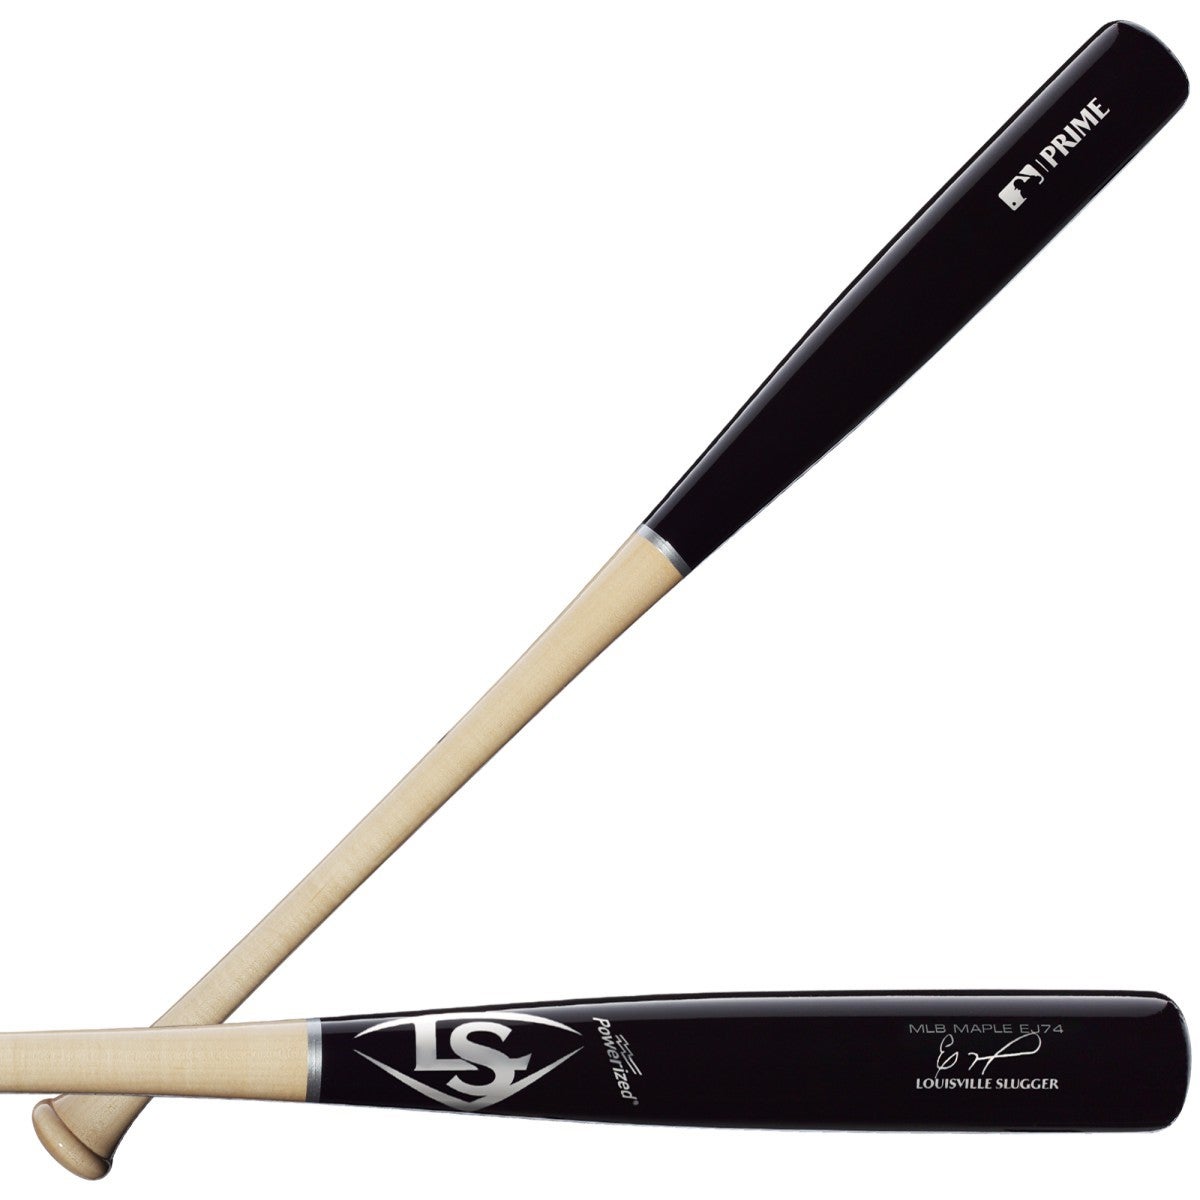 Louisville Slugger Prime Maple Baseball Bat EJ74 - Eloy Jimenez